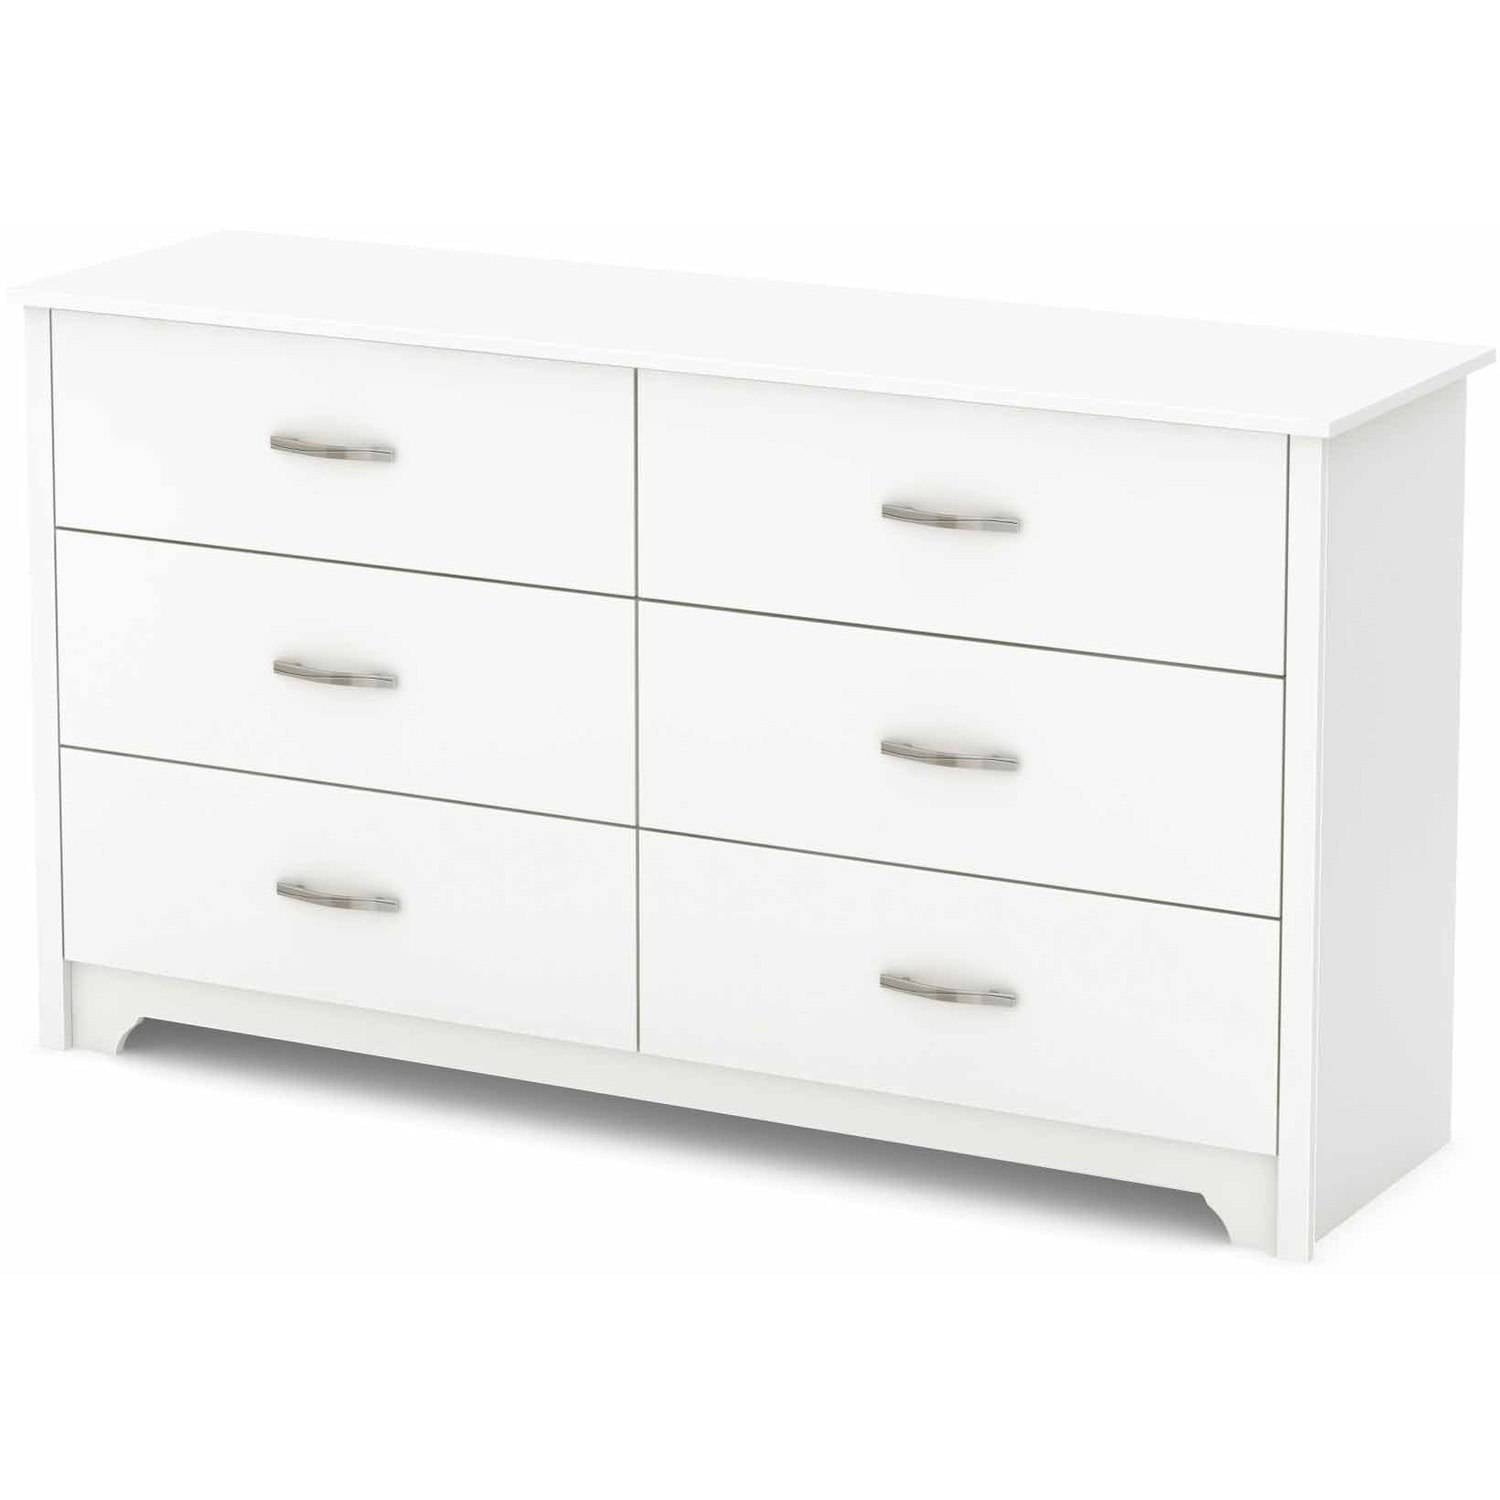 6-Drawer Dresser Organizer Bedroom Clothes Furniture Chest White Finish 